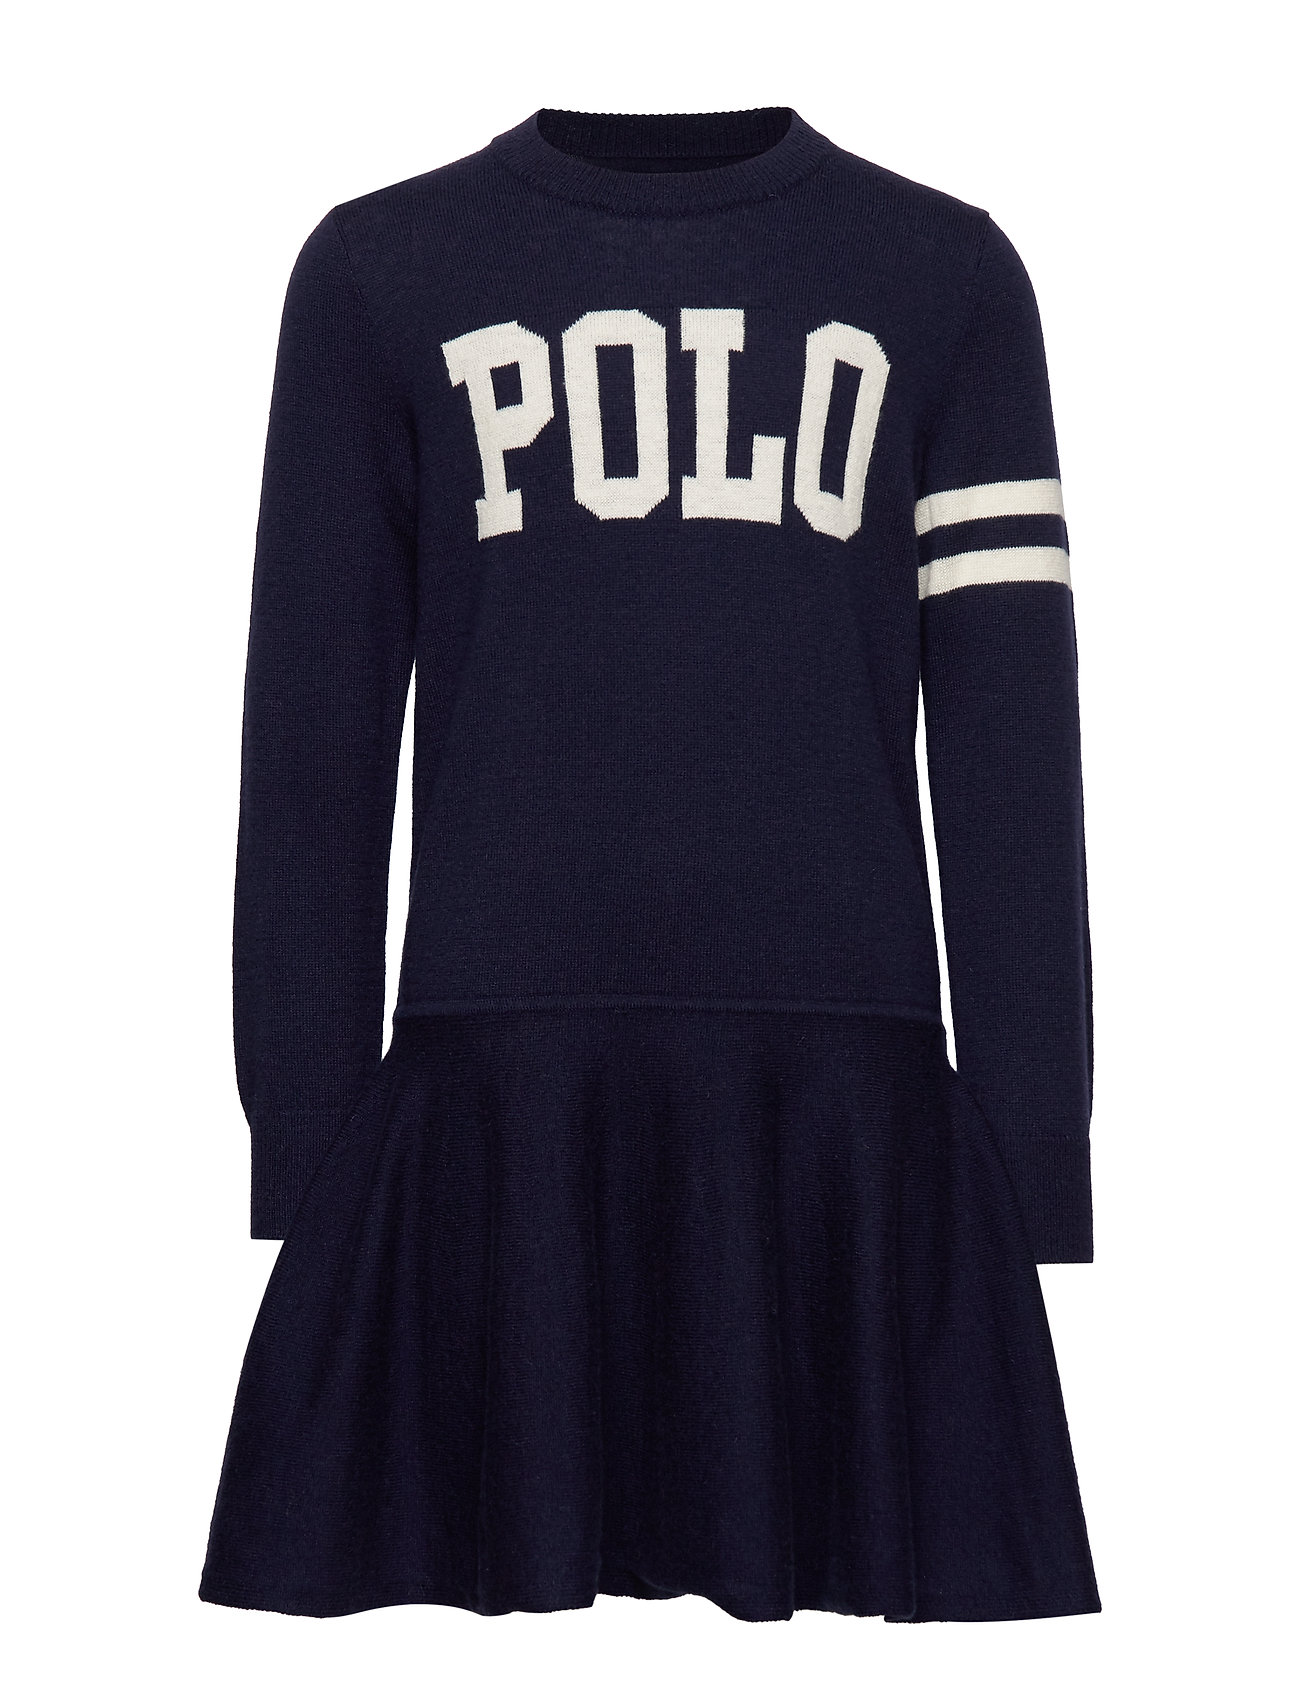 polo dress sweater